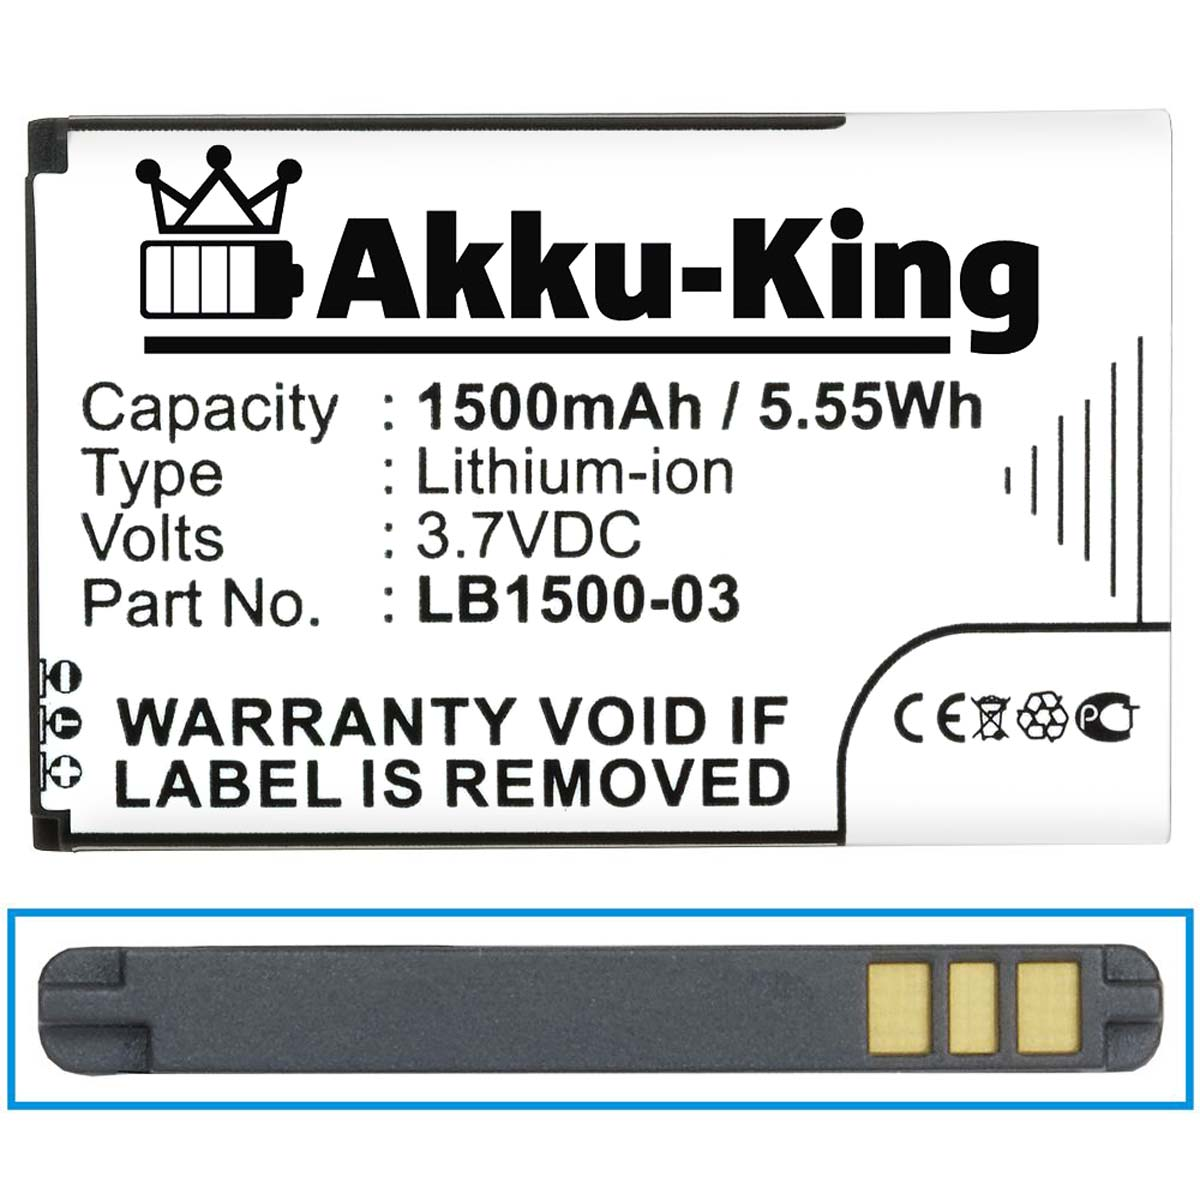 AKKU-KING Akku Li-Ion 3.7 1500mAh LB1500-03 mit Handy-Akku, Huawei Volt, kompatibel